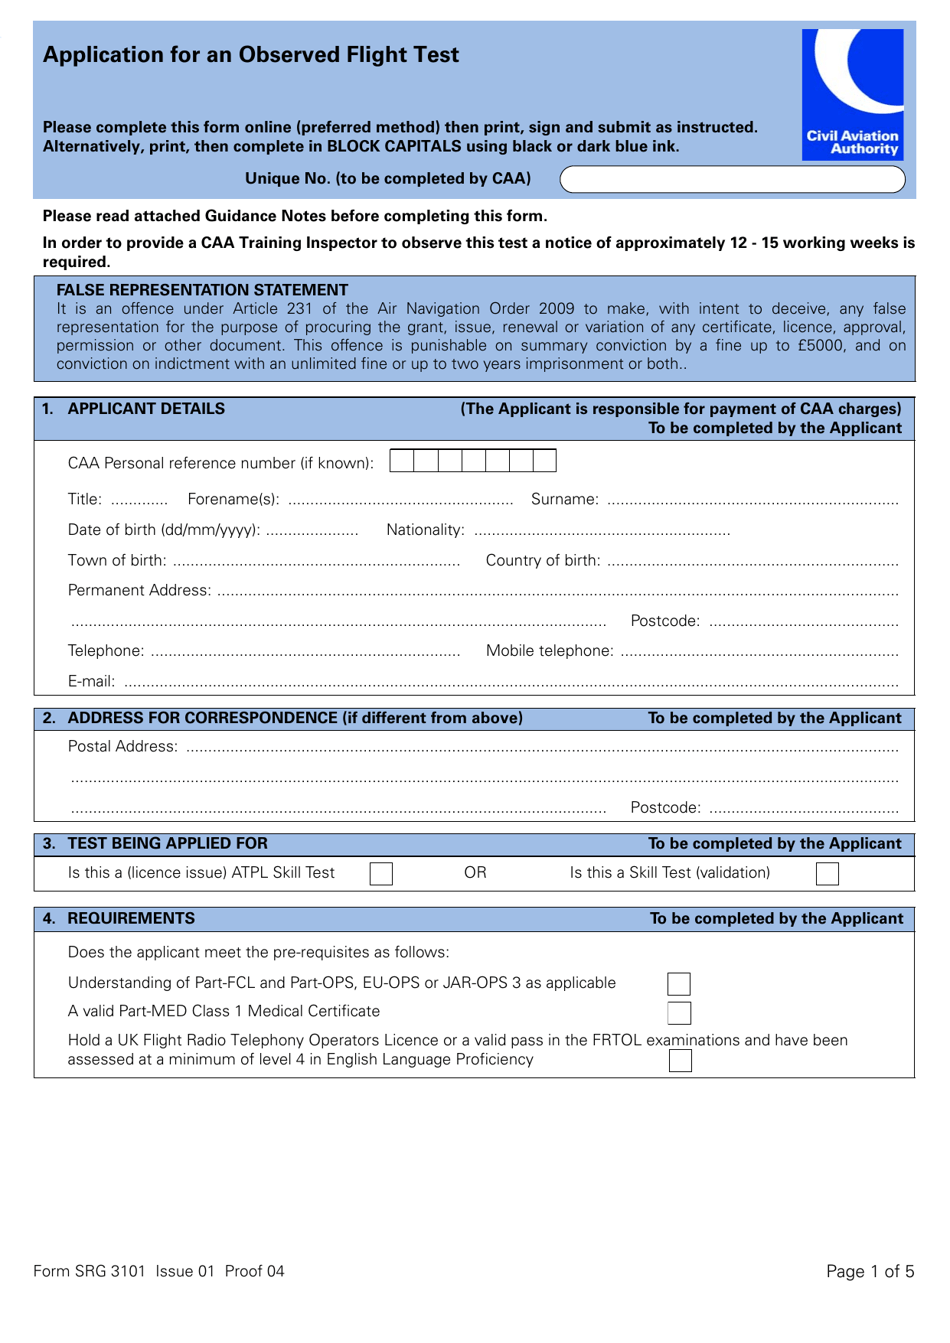 Form SRG3101 Application for an Observed Flight Test - United Kingdom, Page 1